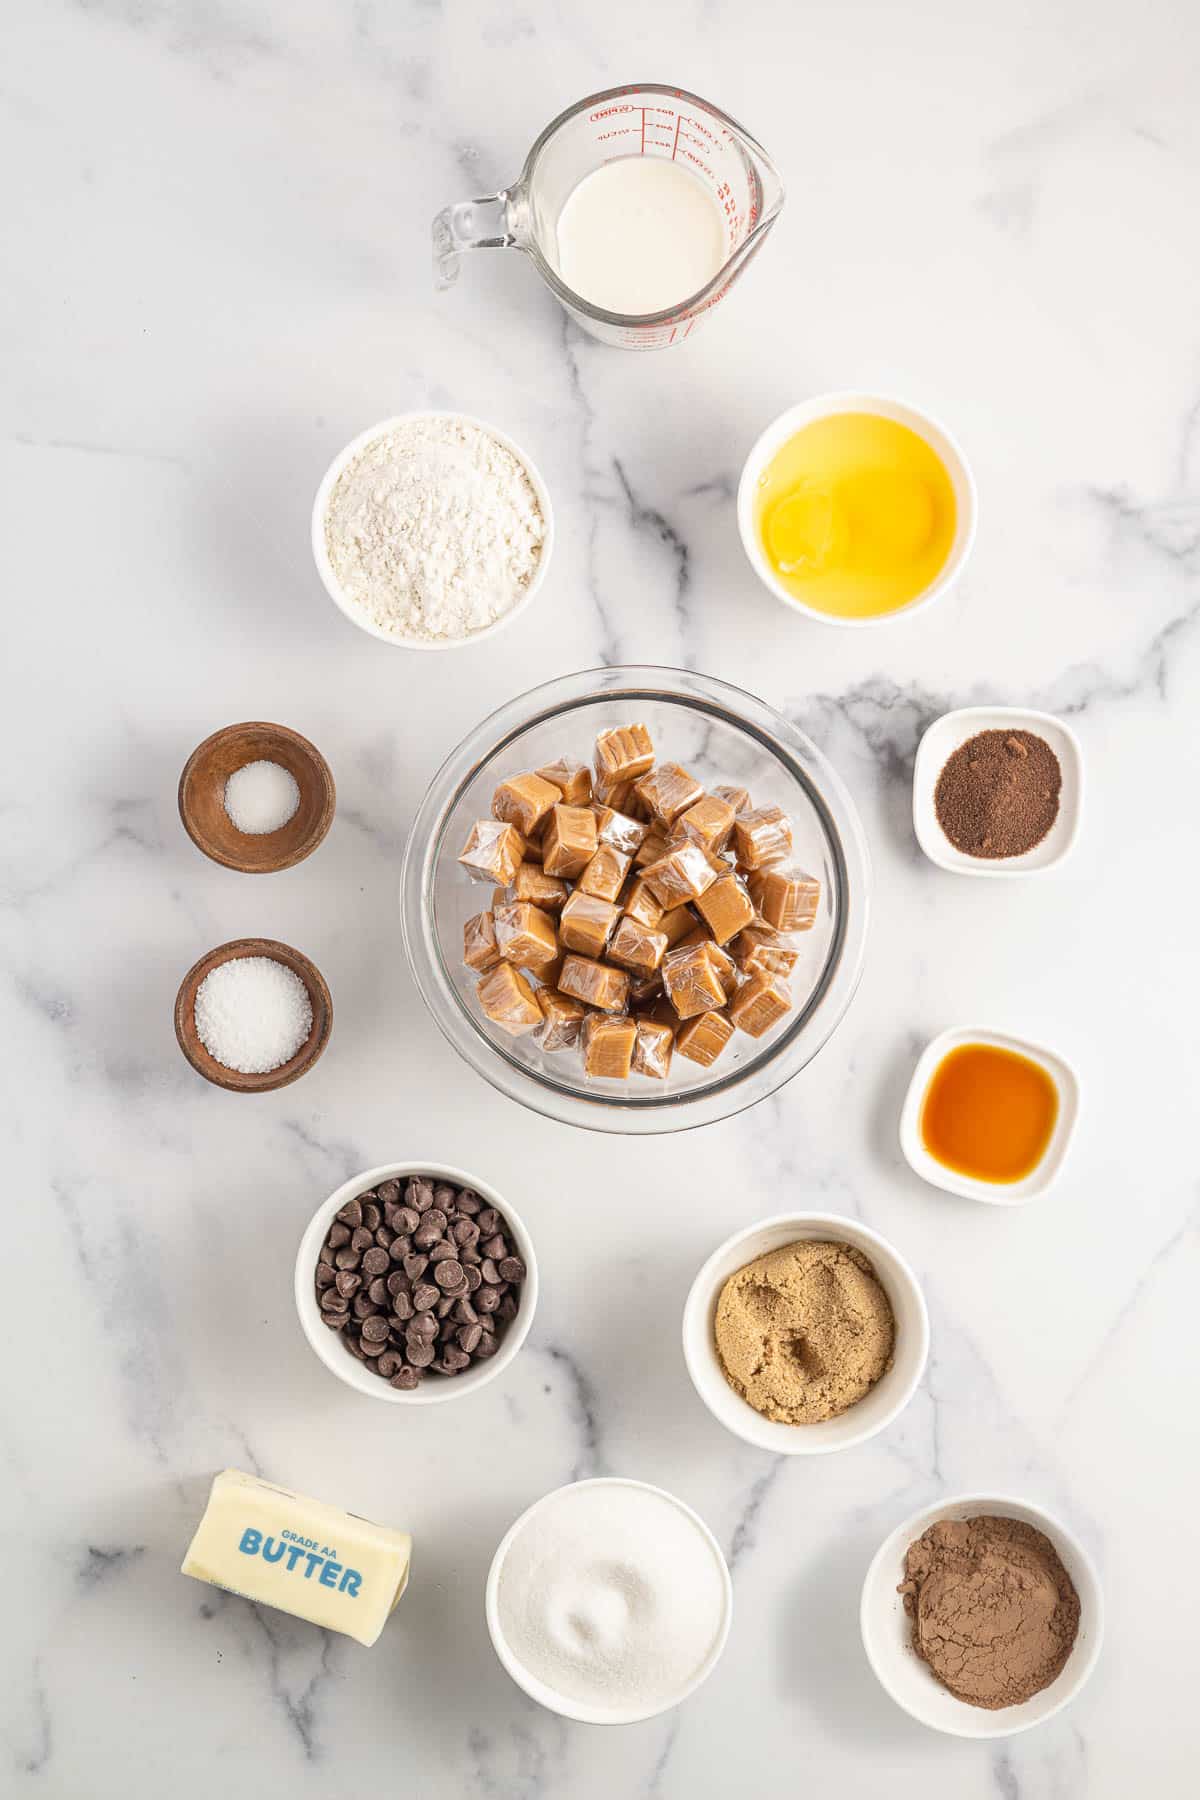 Ingredients for Salted Caramel Brownies.